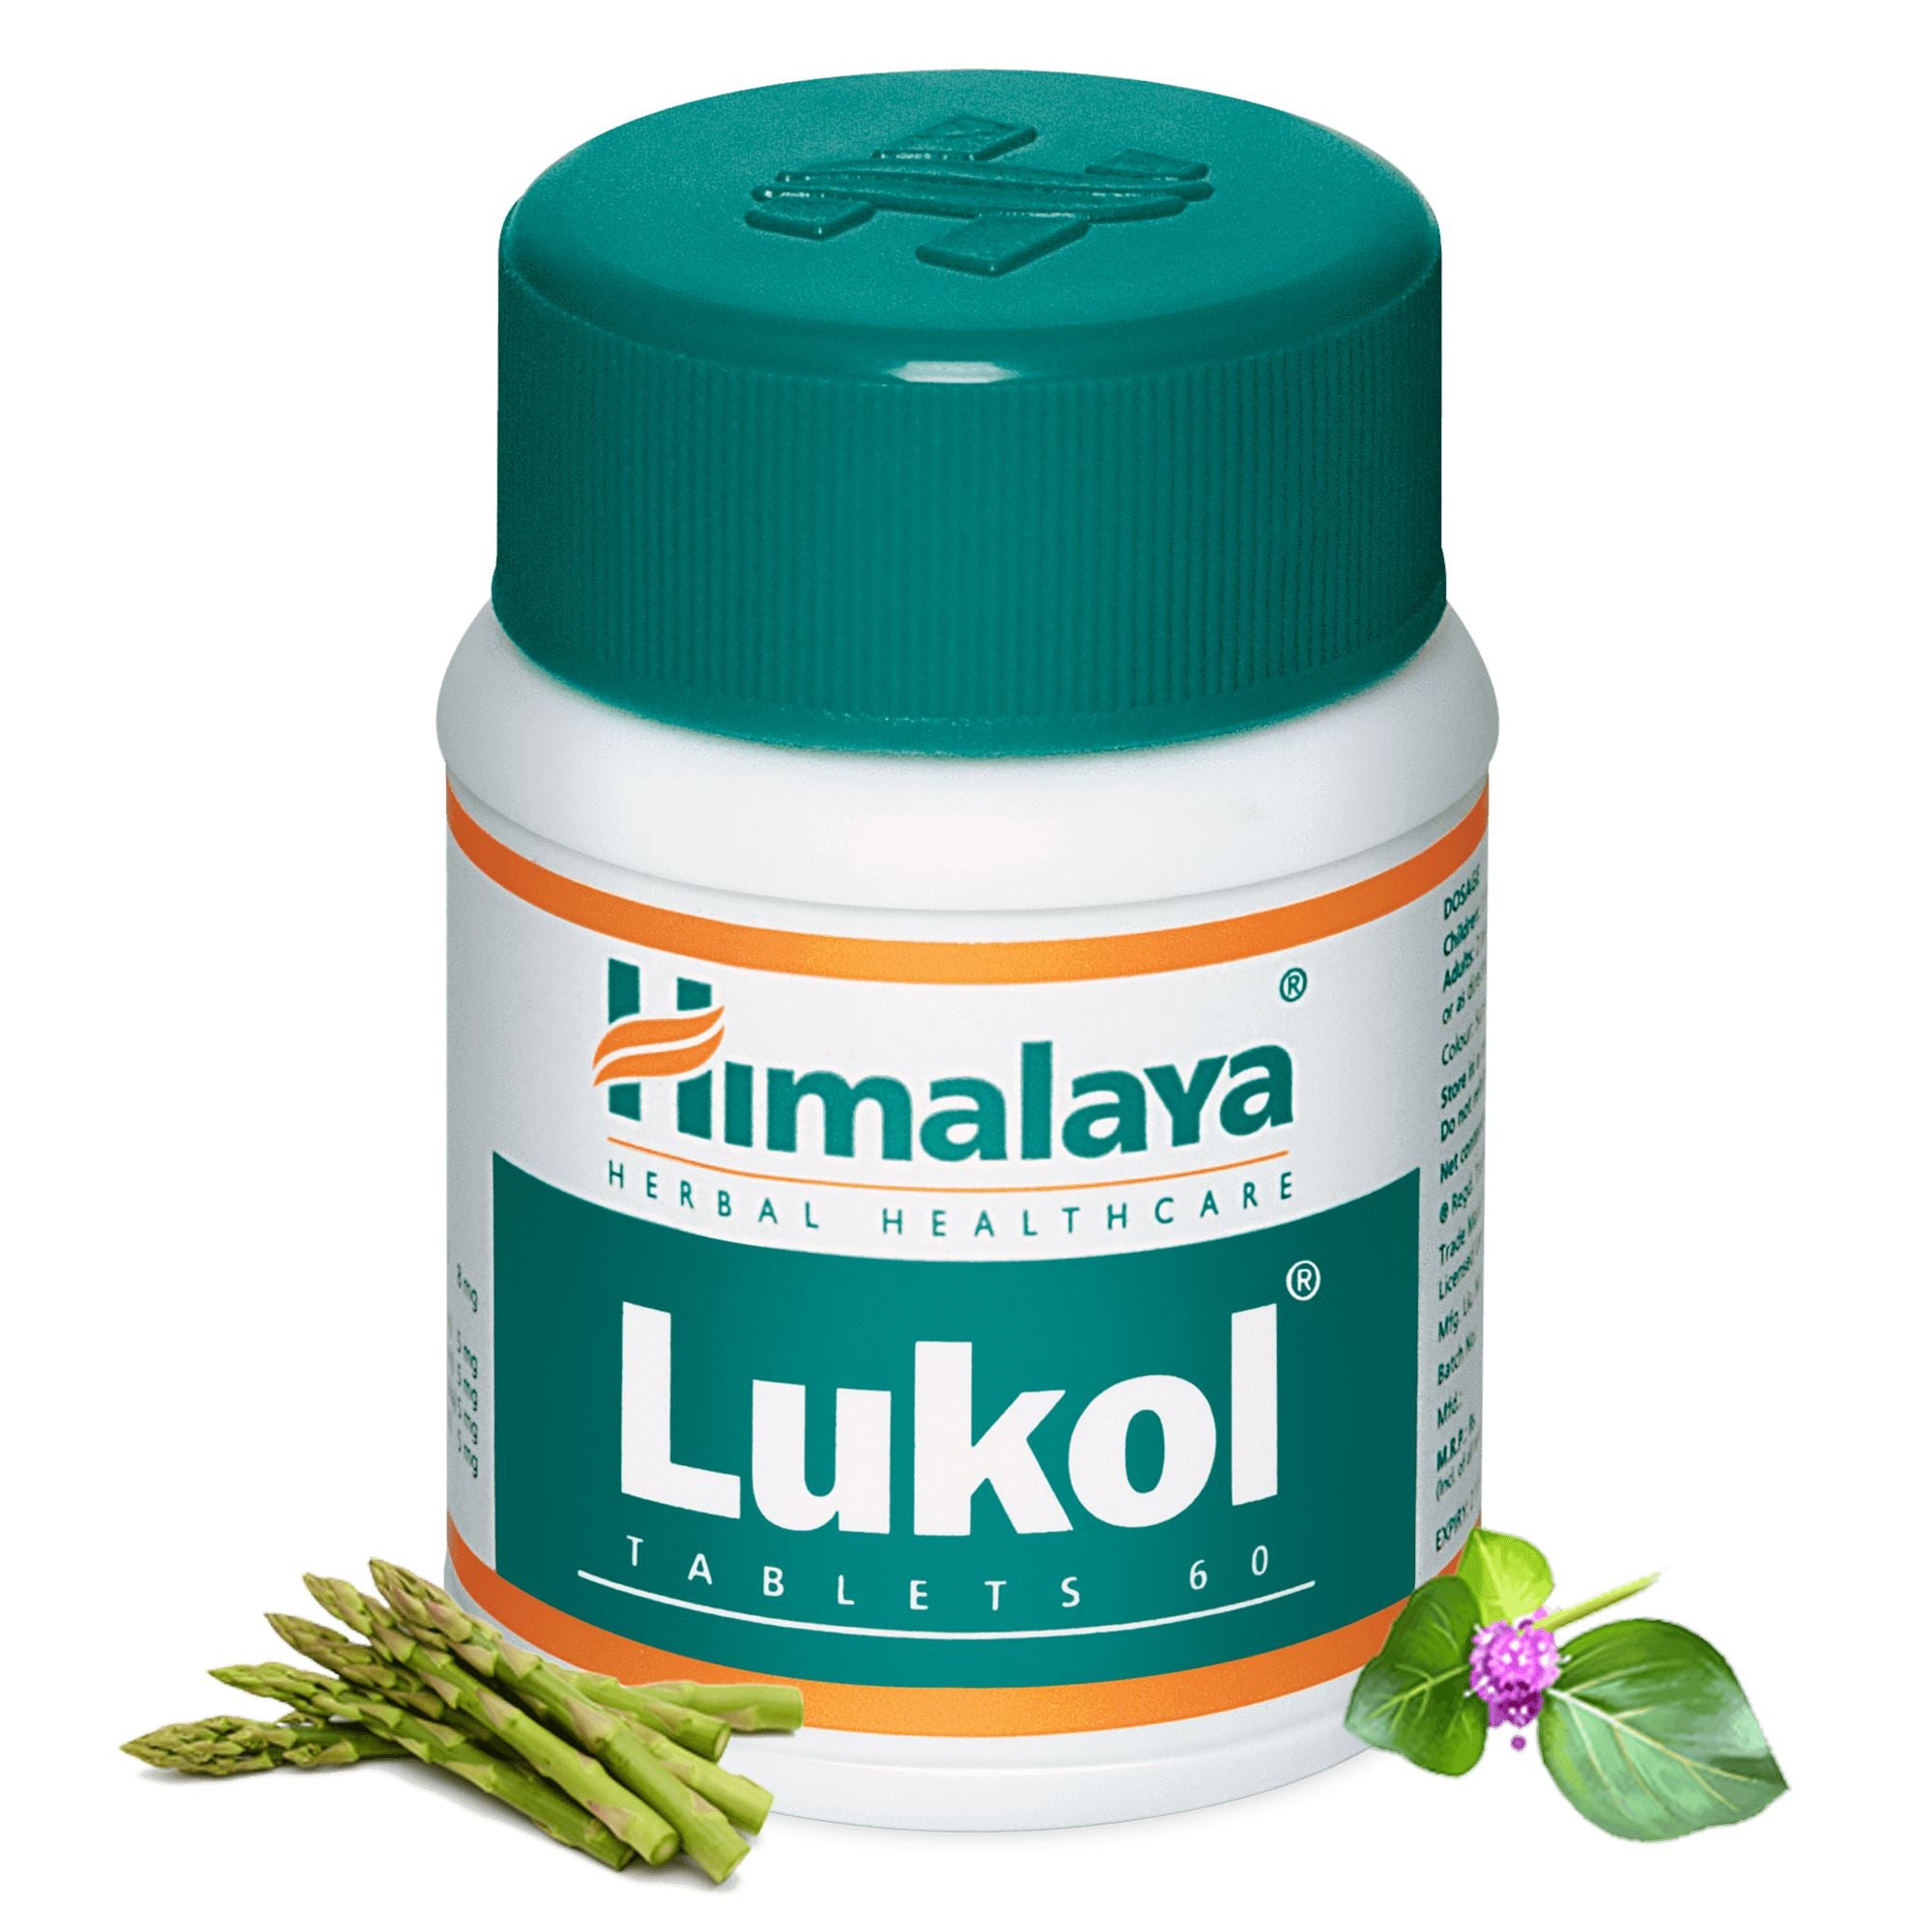 Himalaya Lukol - Helps in defending leucorrhea